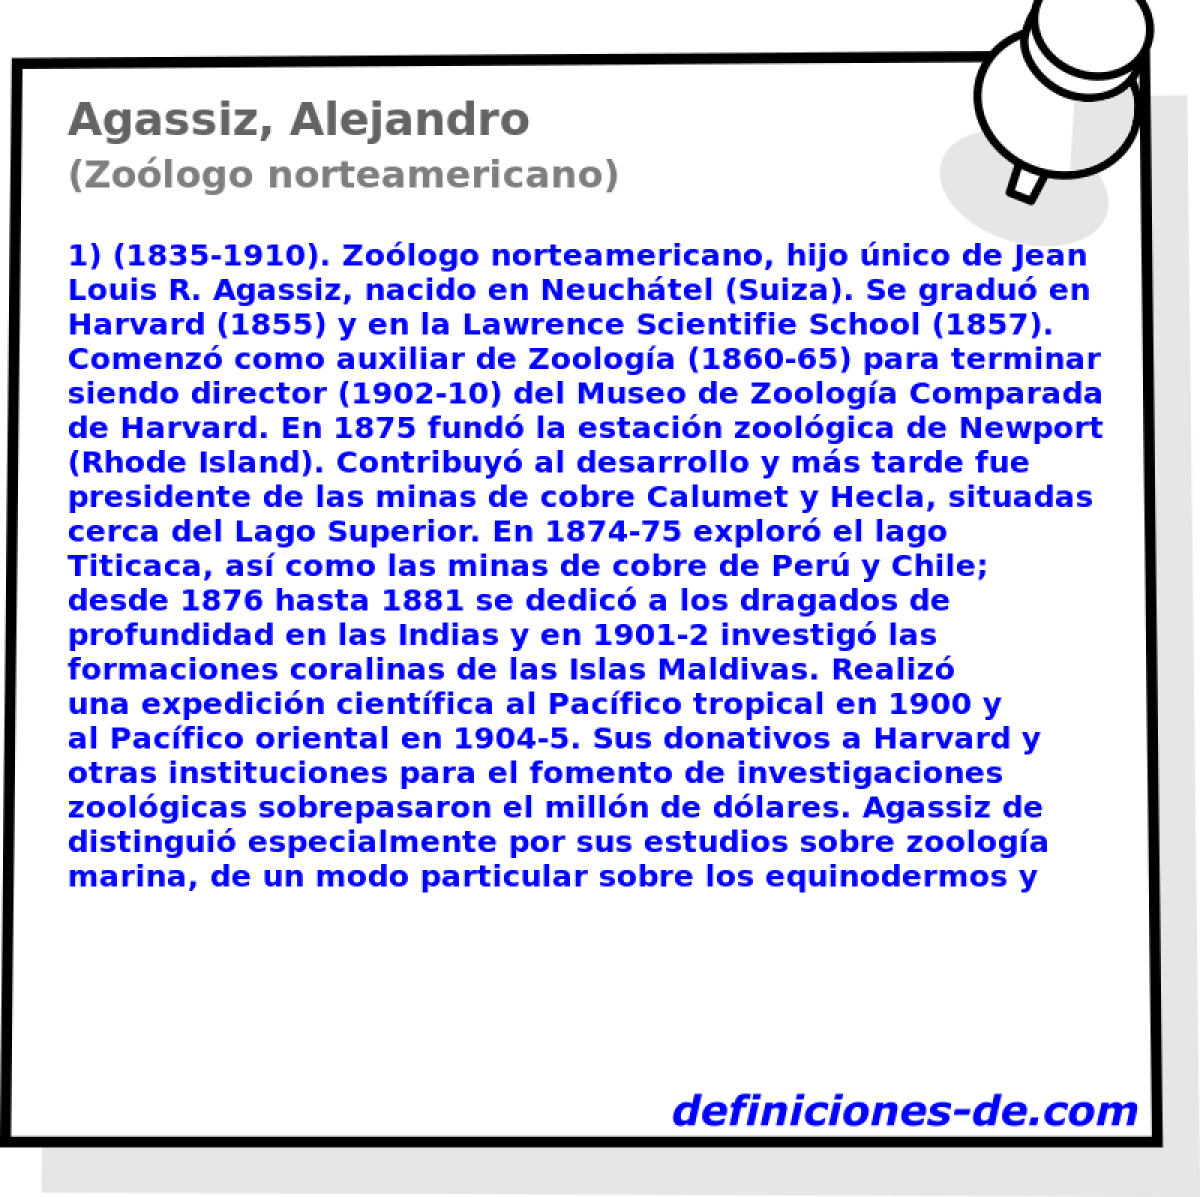 Agassiz, Alejandro (Zologo norteamericano)